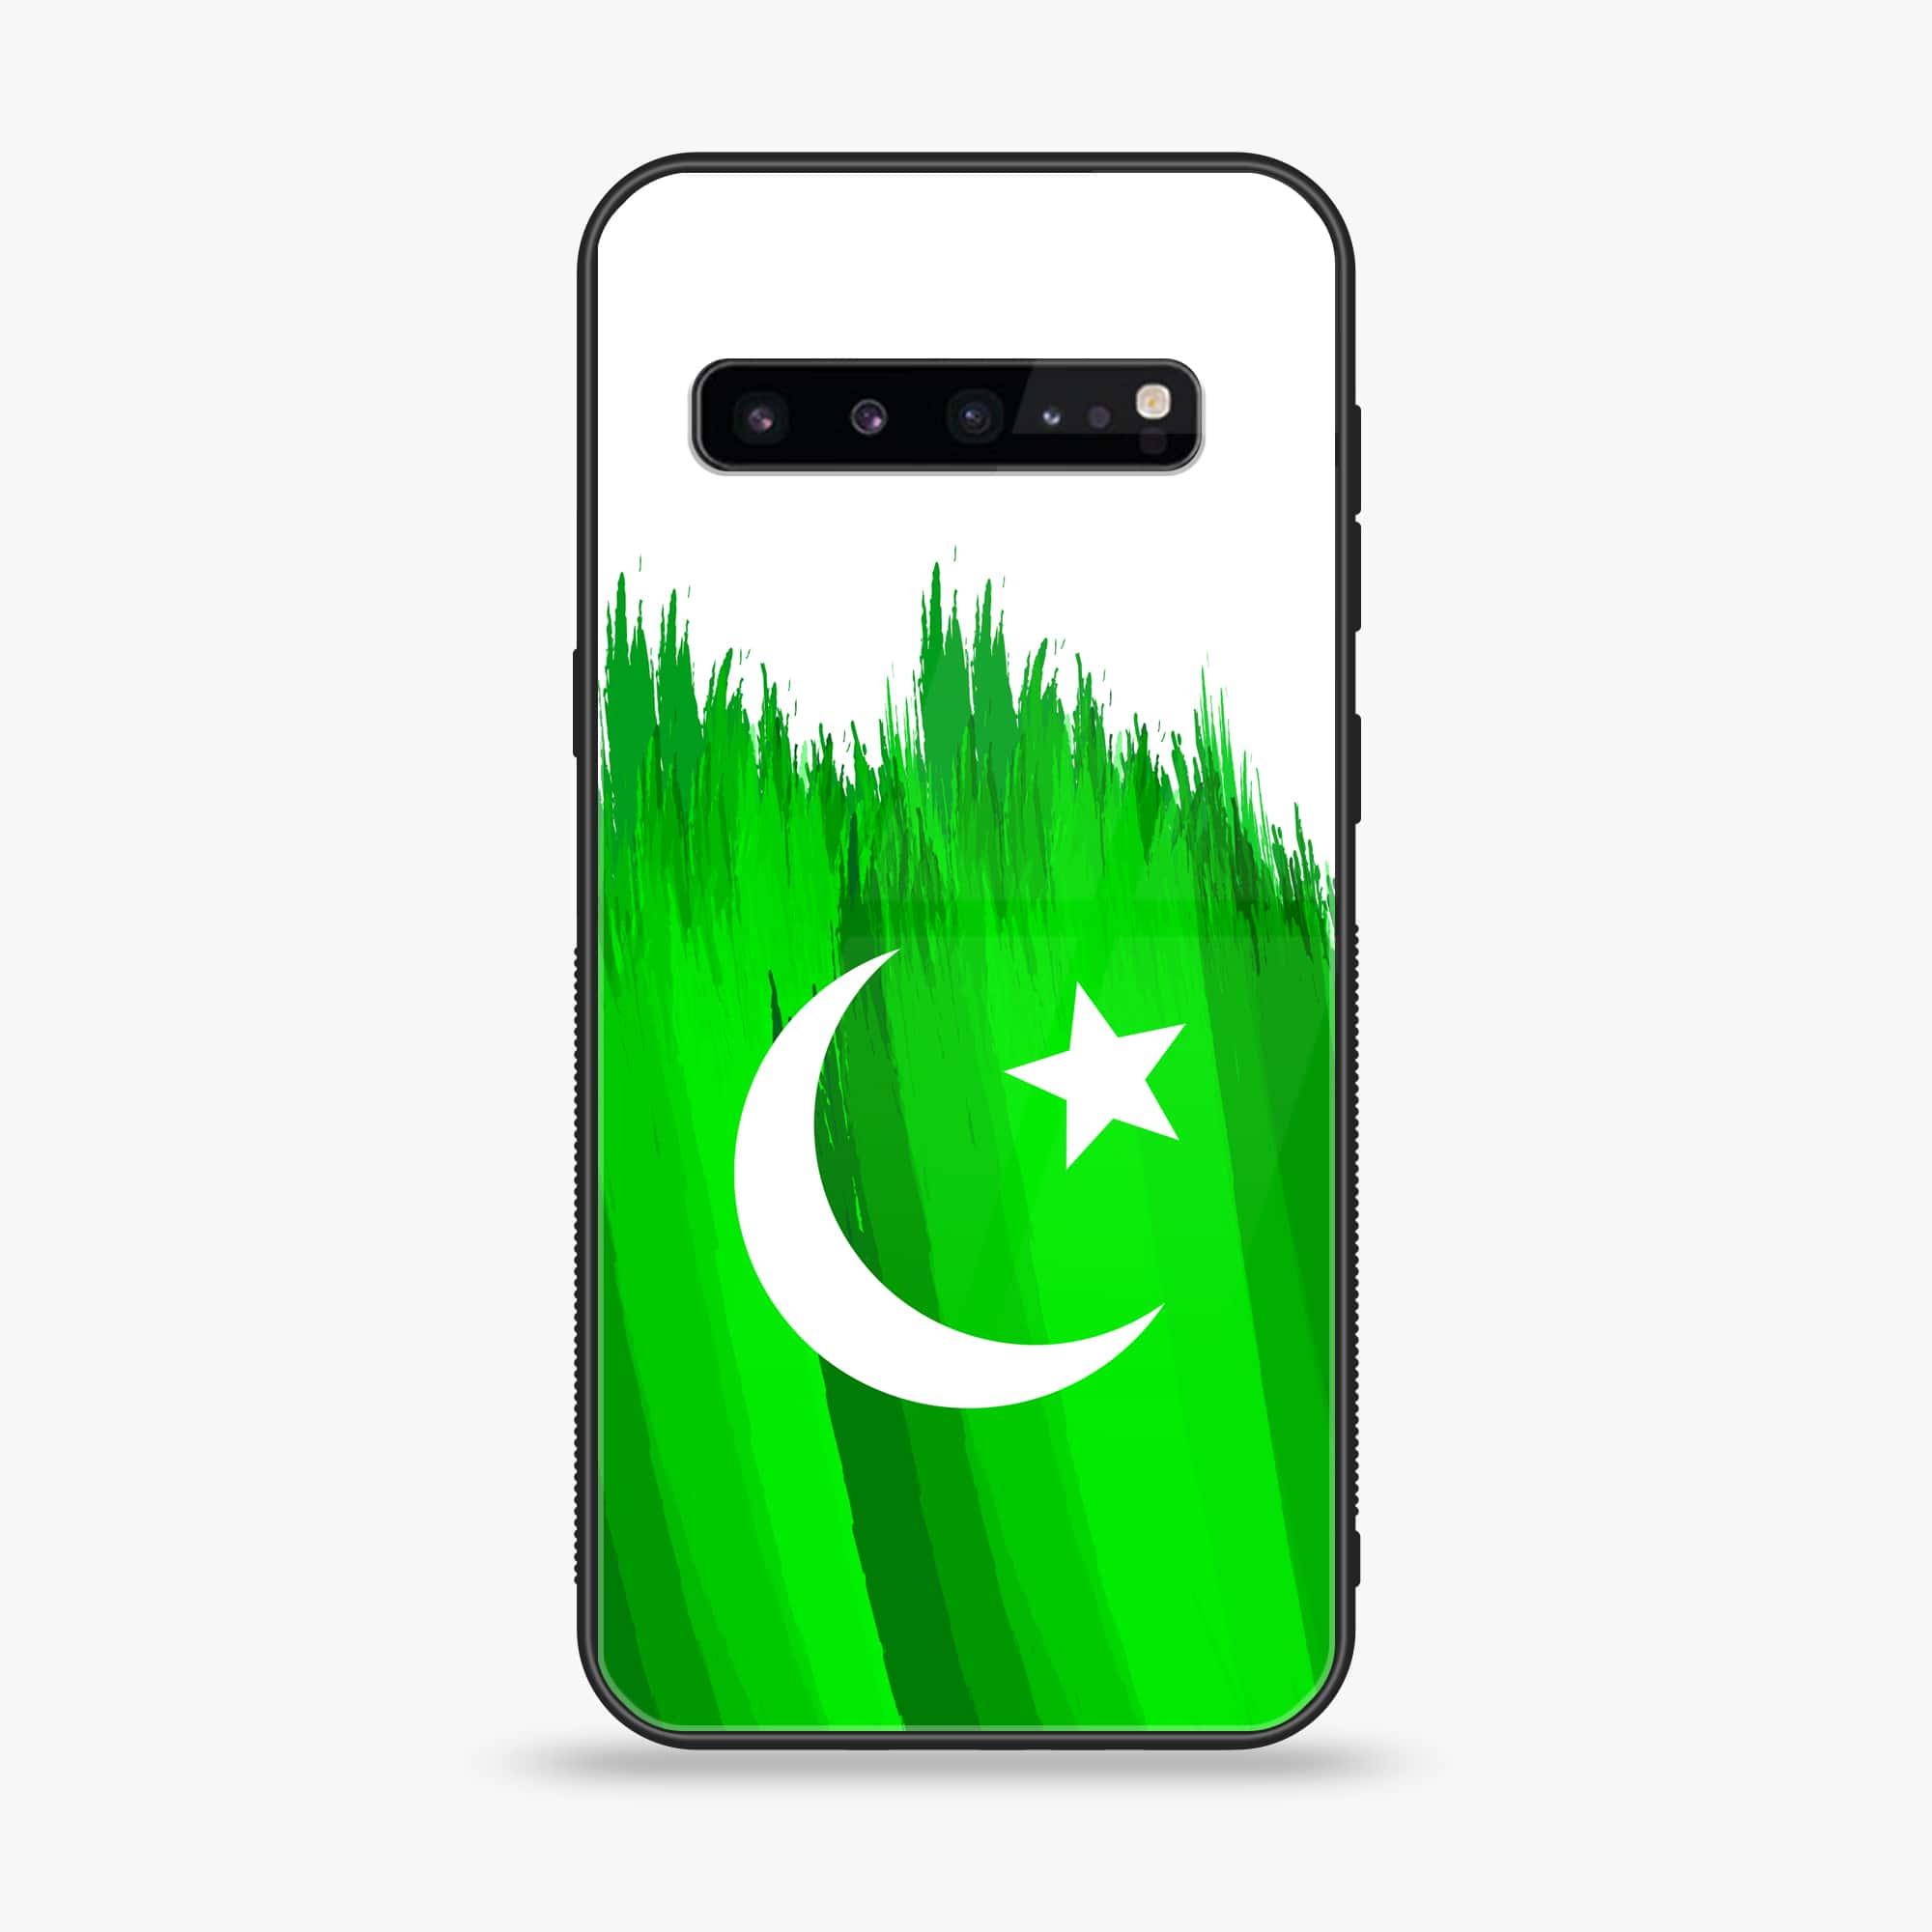 Samsung Galaxy S10 5G - Pakistani Flag Series - Premium Printed Glass soft Bumper shock Proof Case